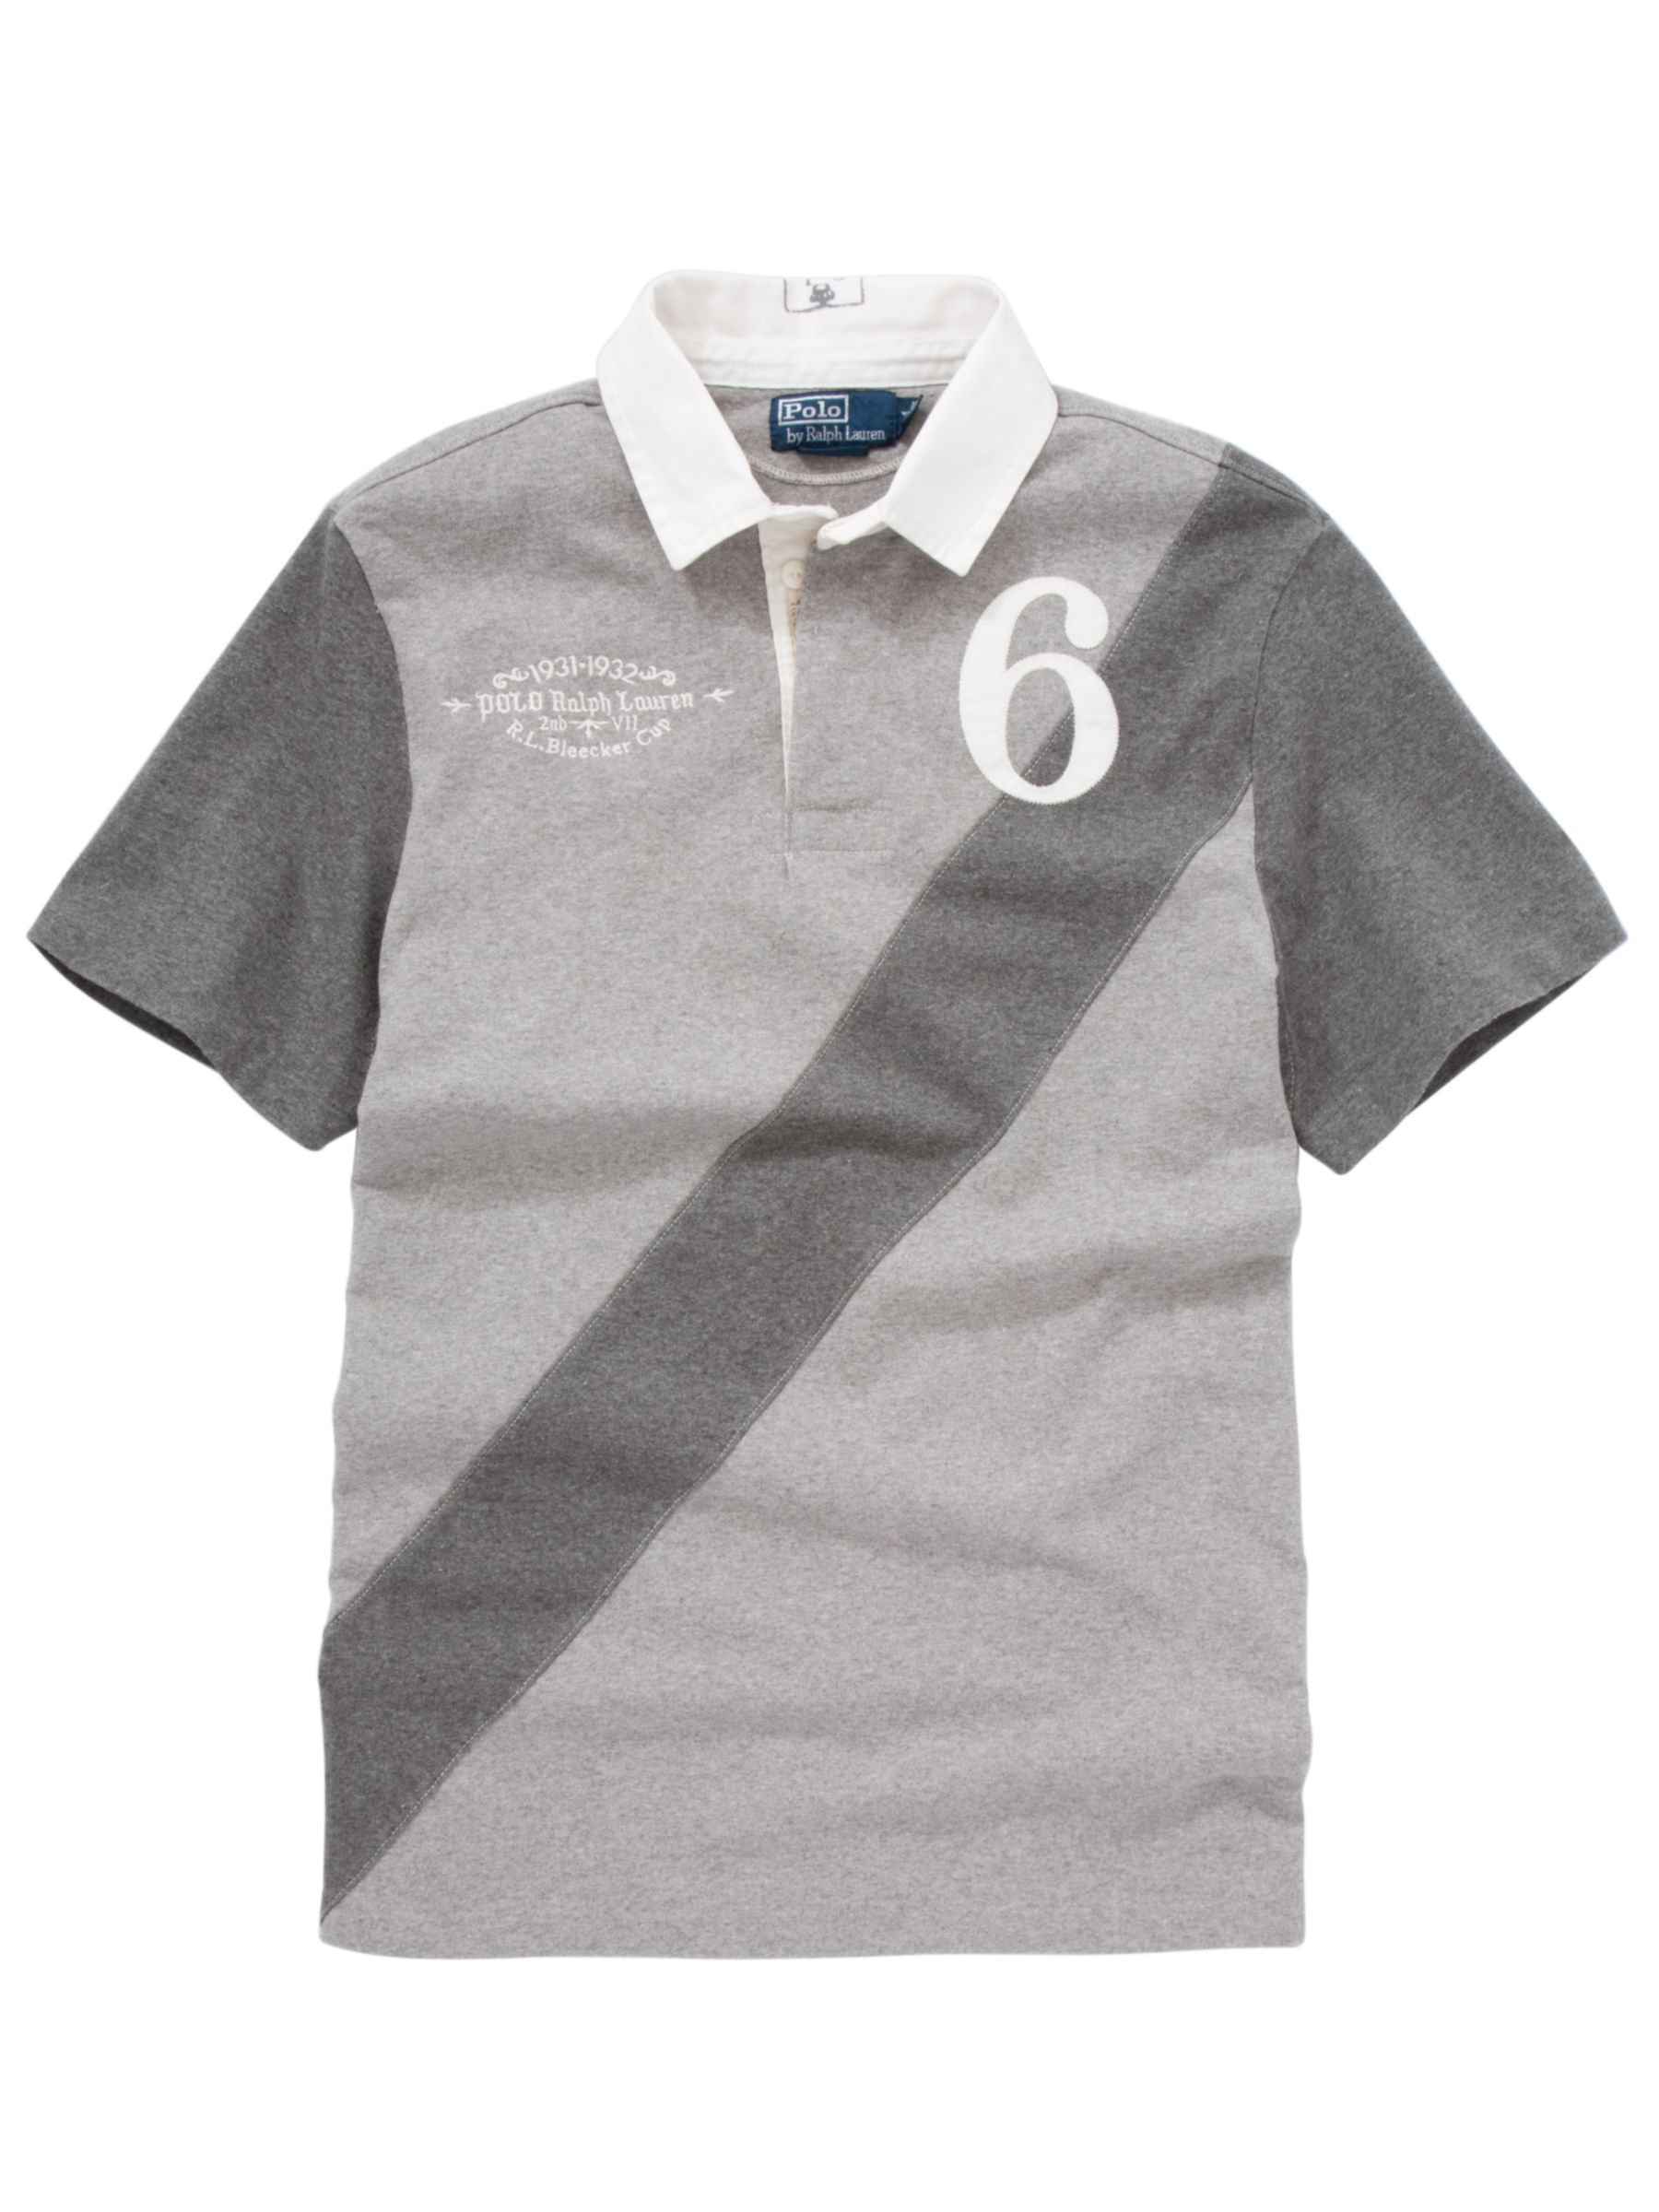 Short Sleeve Rugby Shirt, Grey